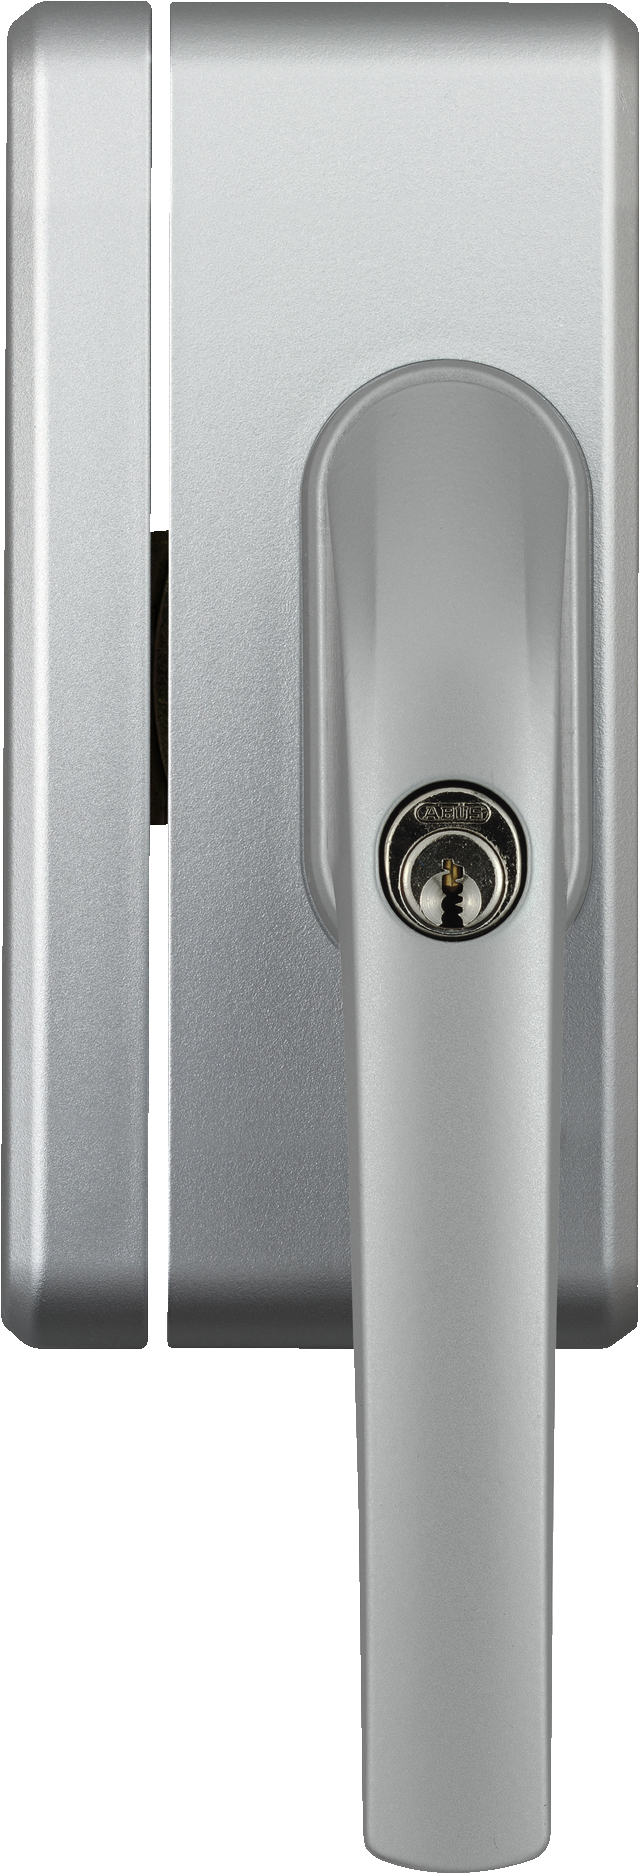 Window handle lock FO400A S AL0145